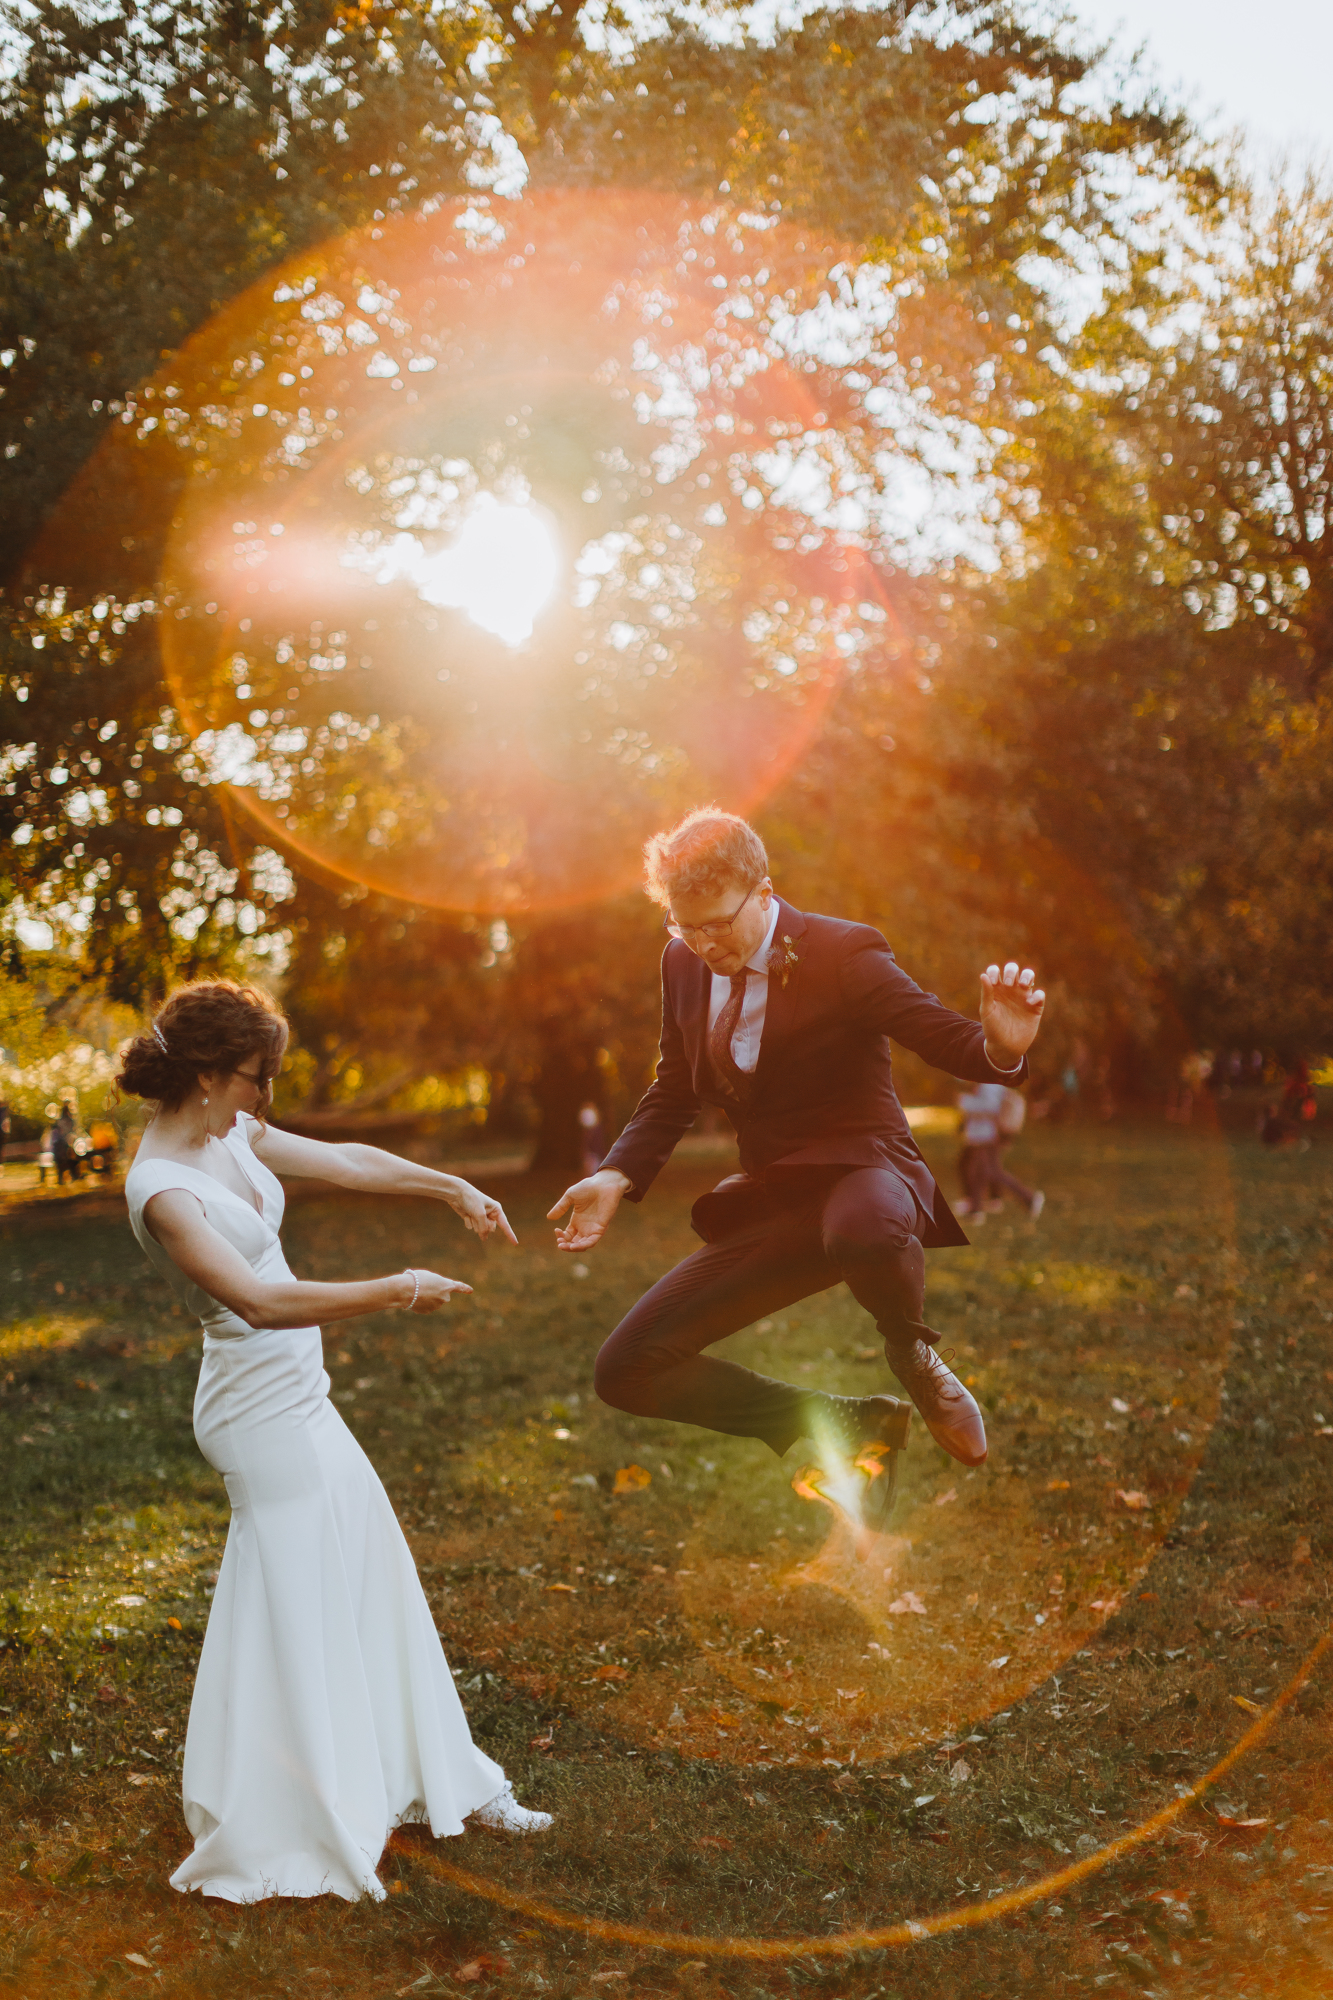 Romantic fall wedding photos at Prospect Park